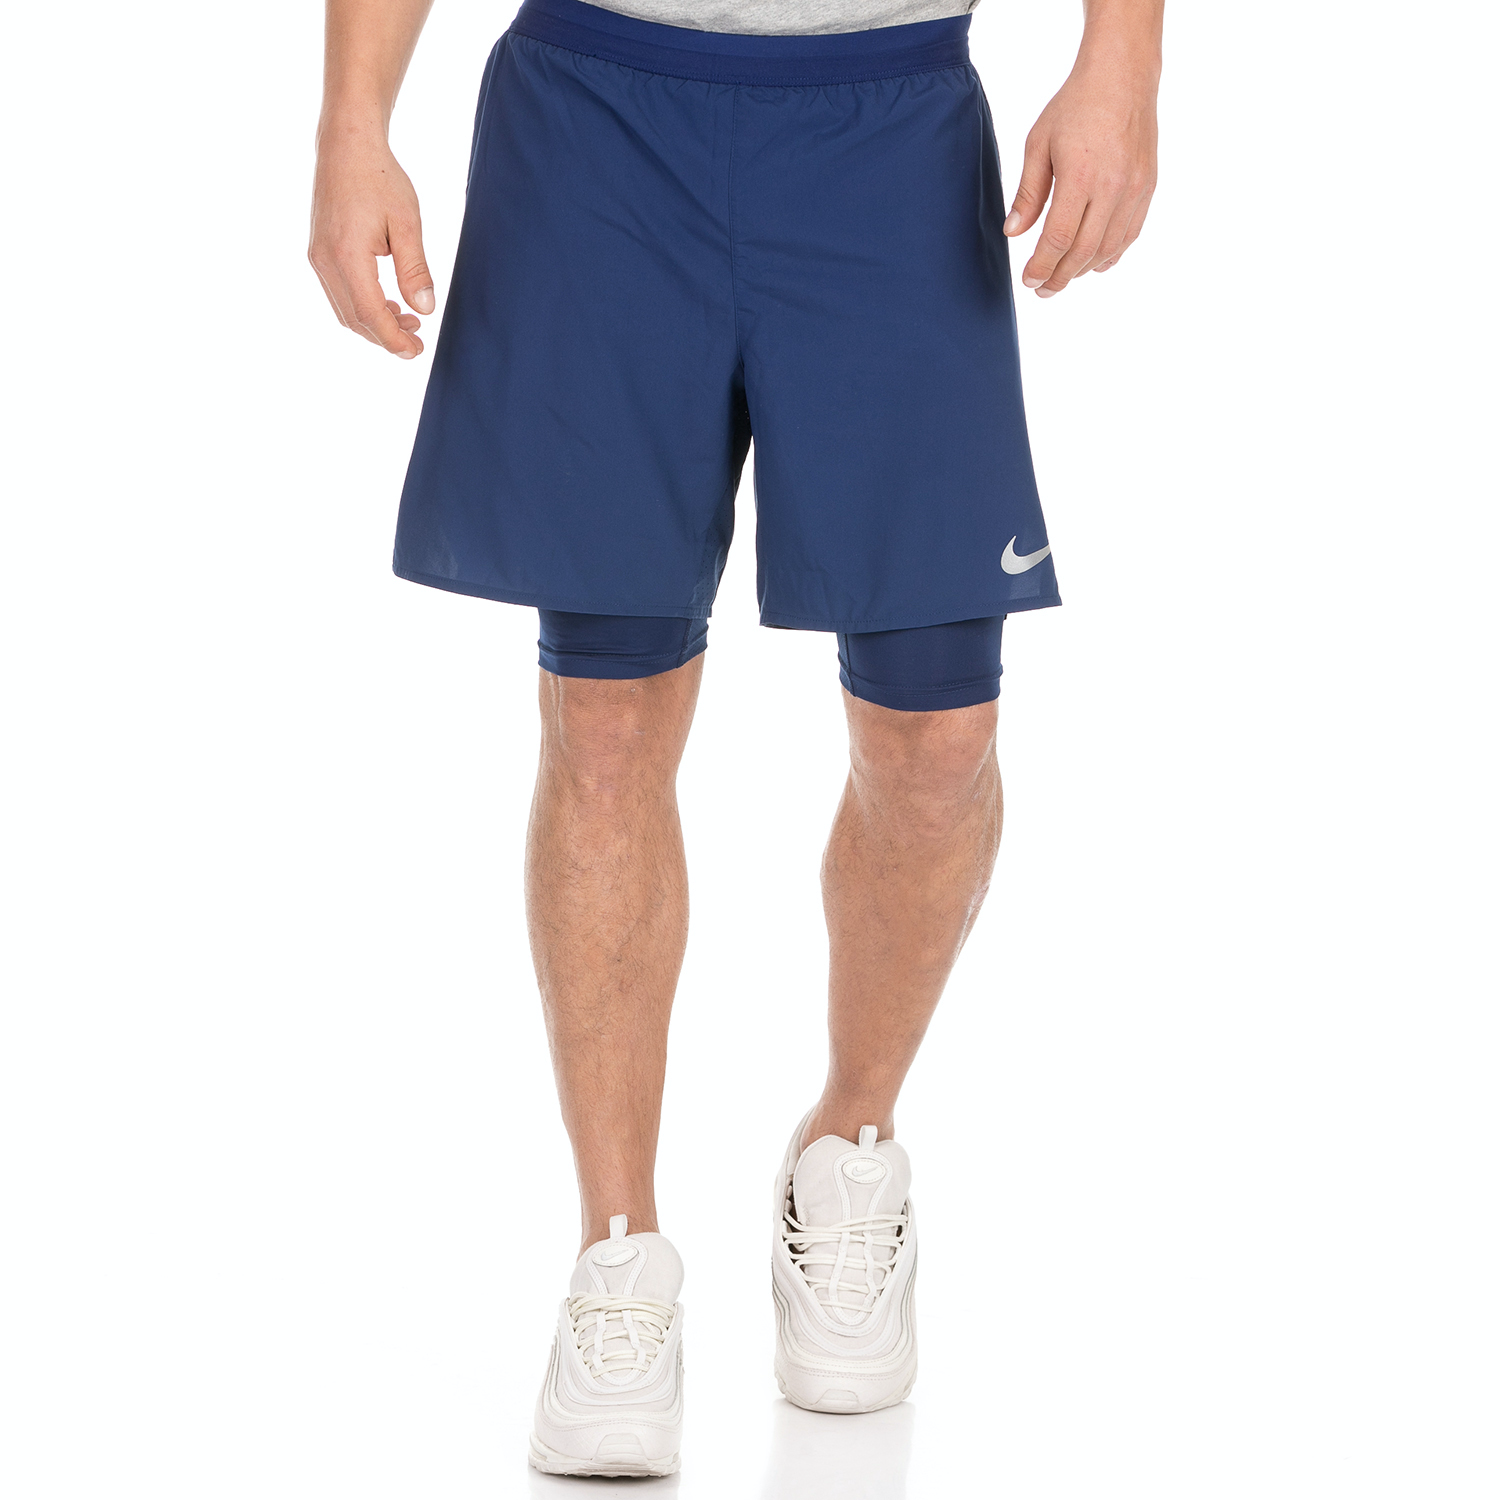 NIKE - Ανδρική βερμούδα running Nike STRIDE 2IN1 μπλε Ανδρικά/Ρούχα/Σορτς-Βερμούδες/Αθλητικά